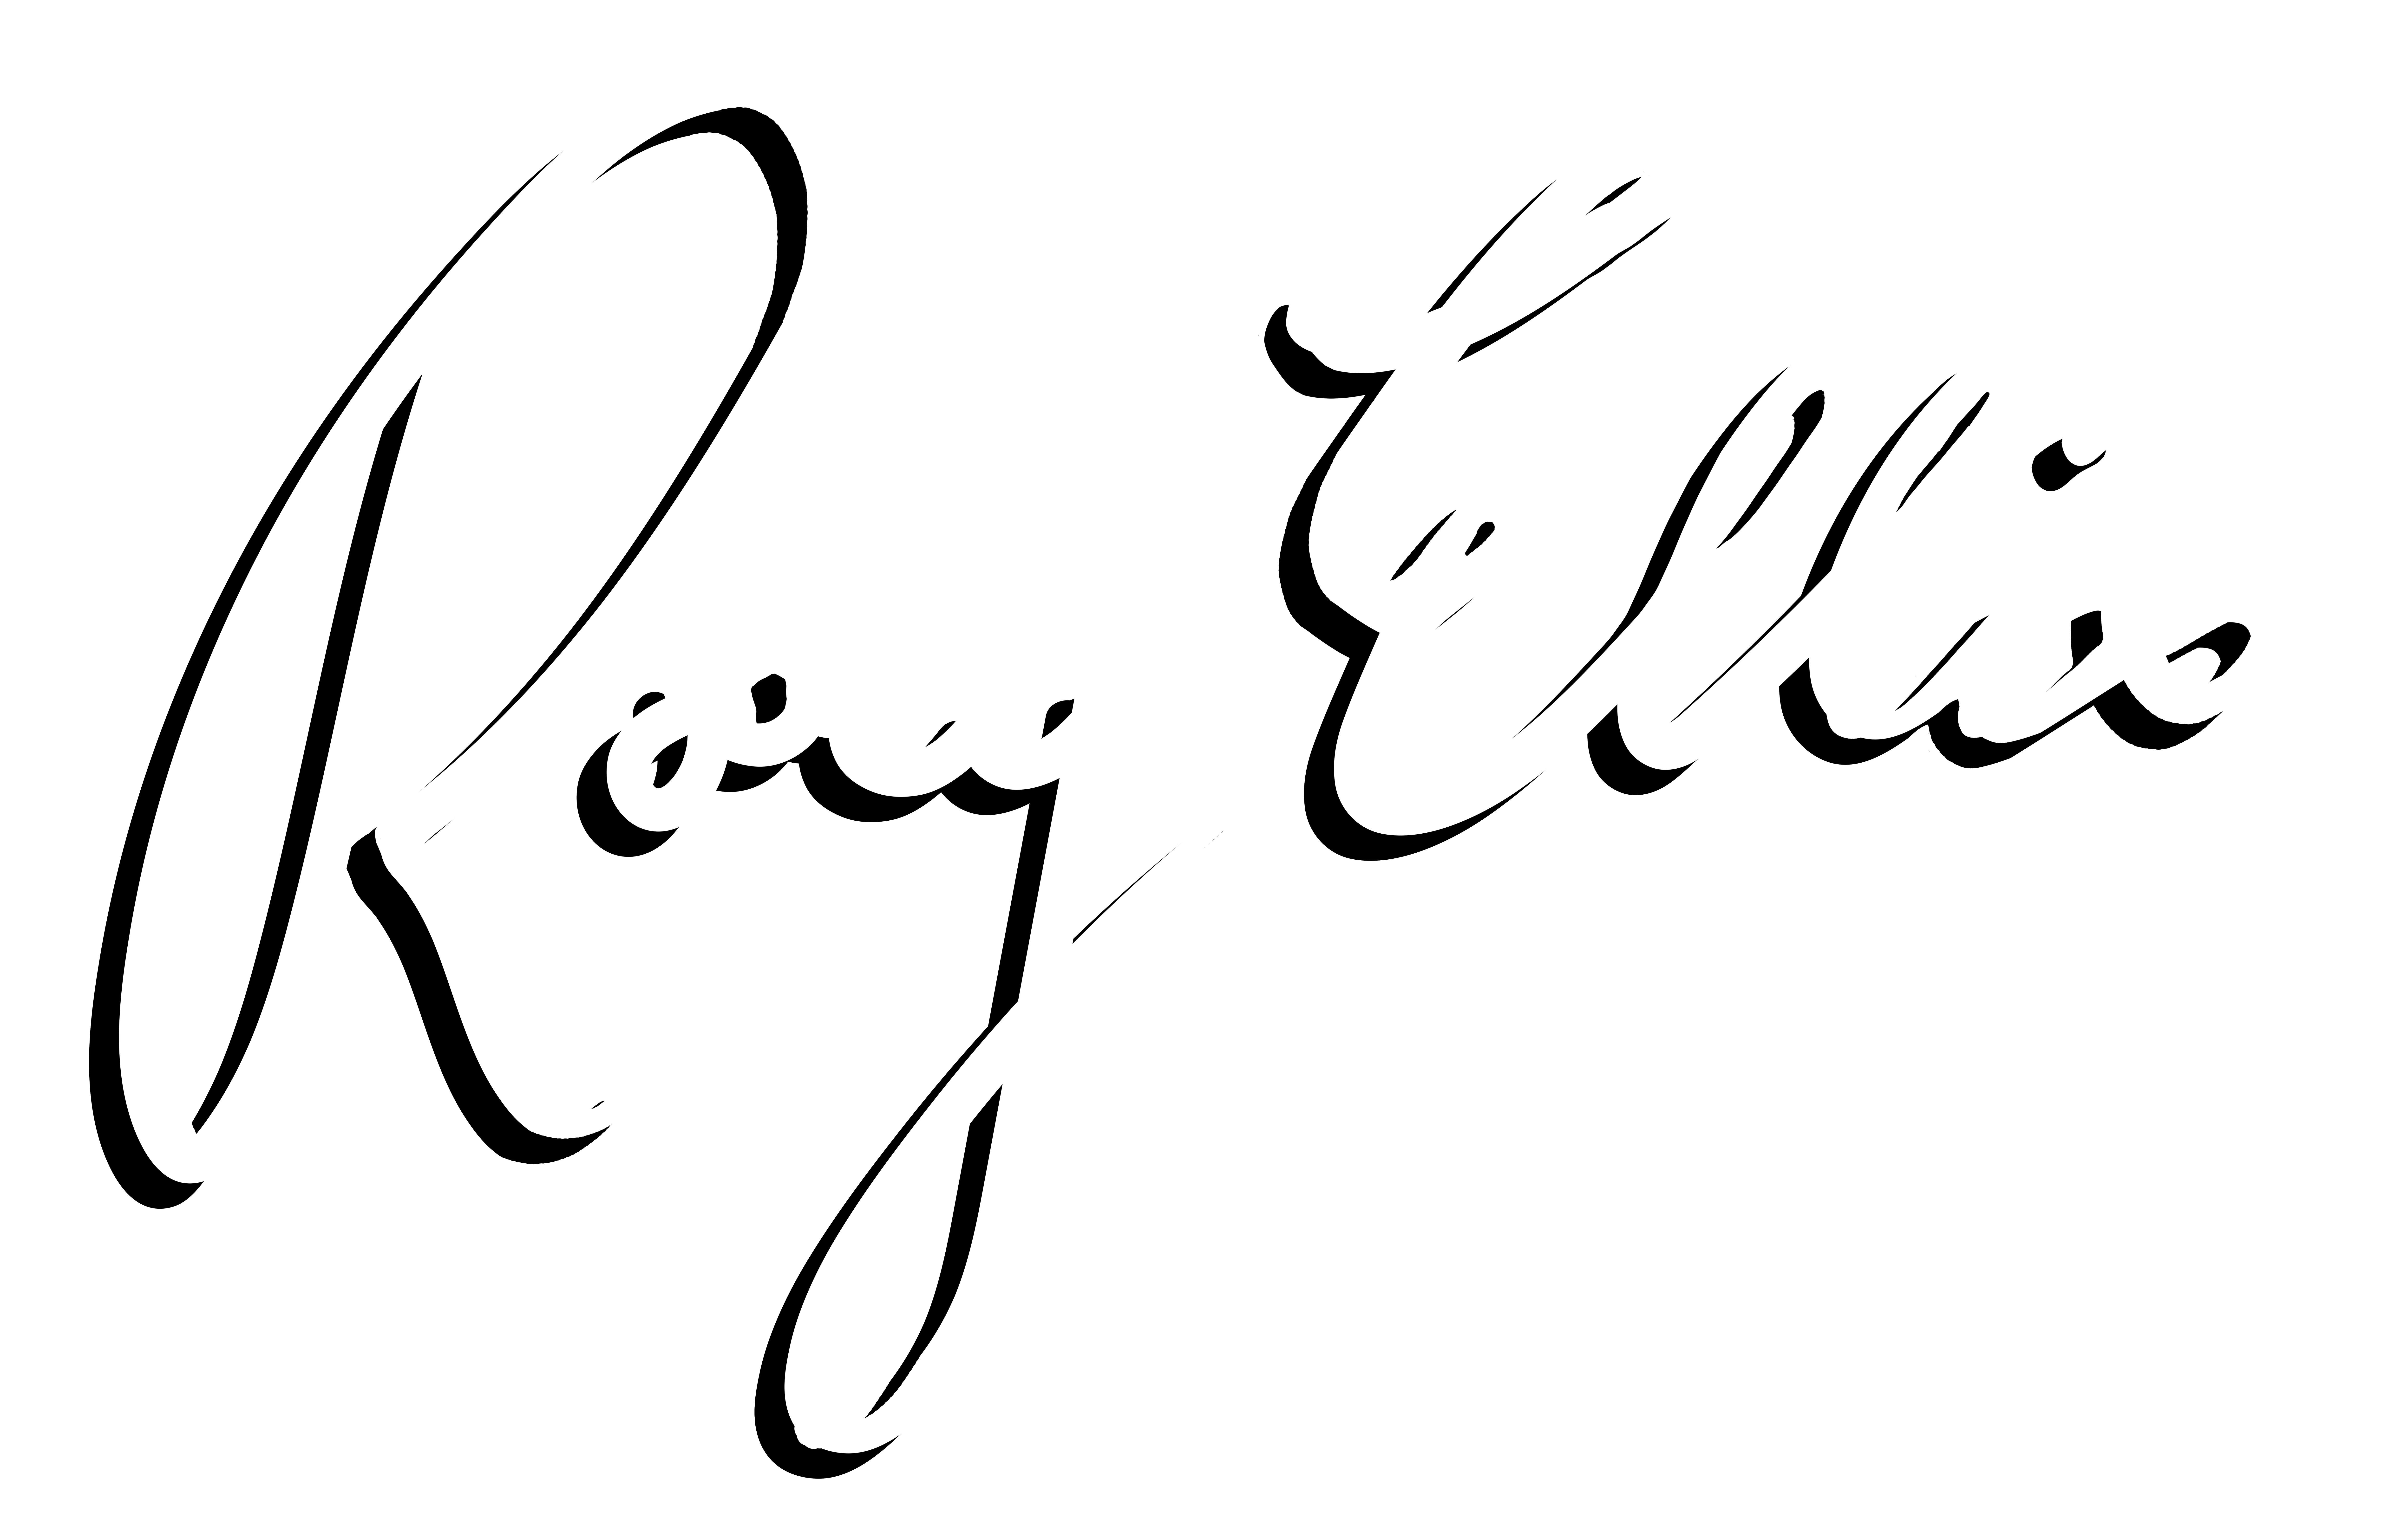 Rory Ellis